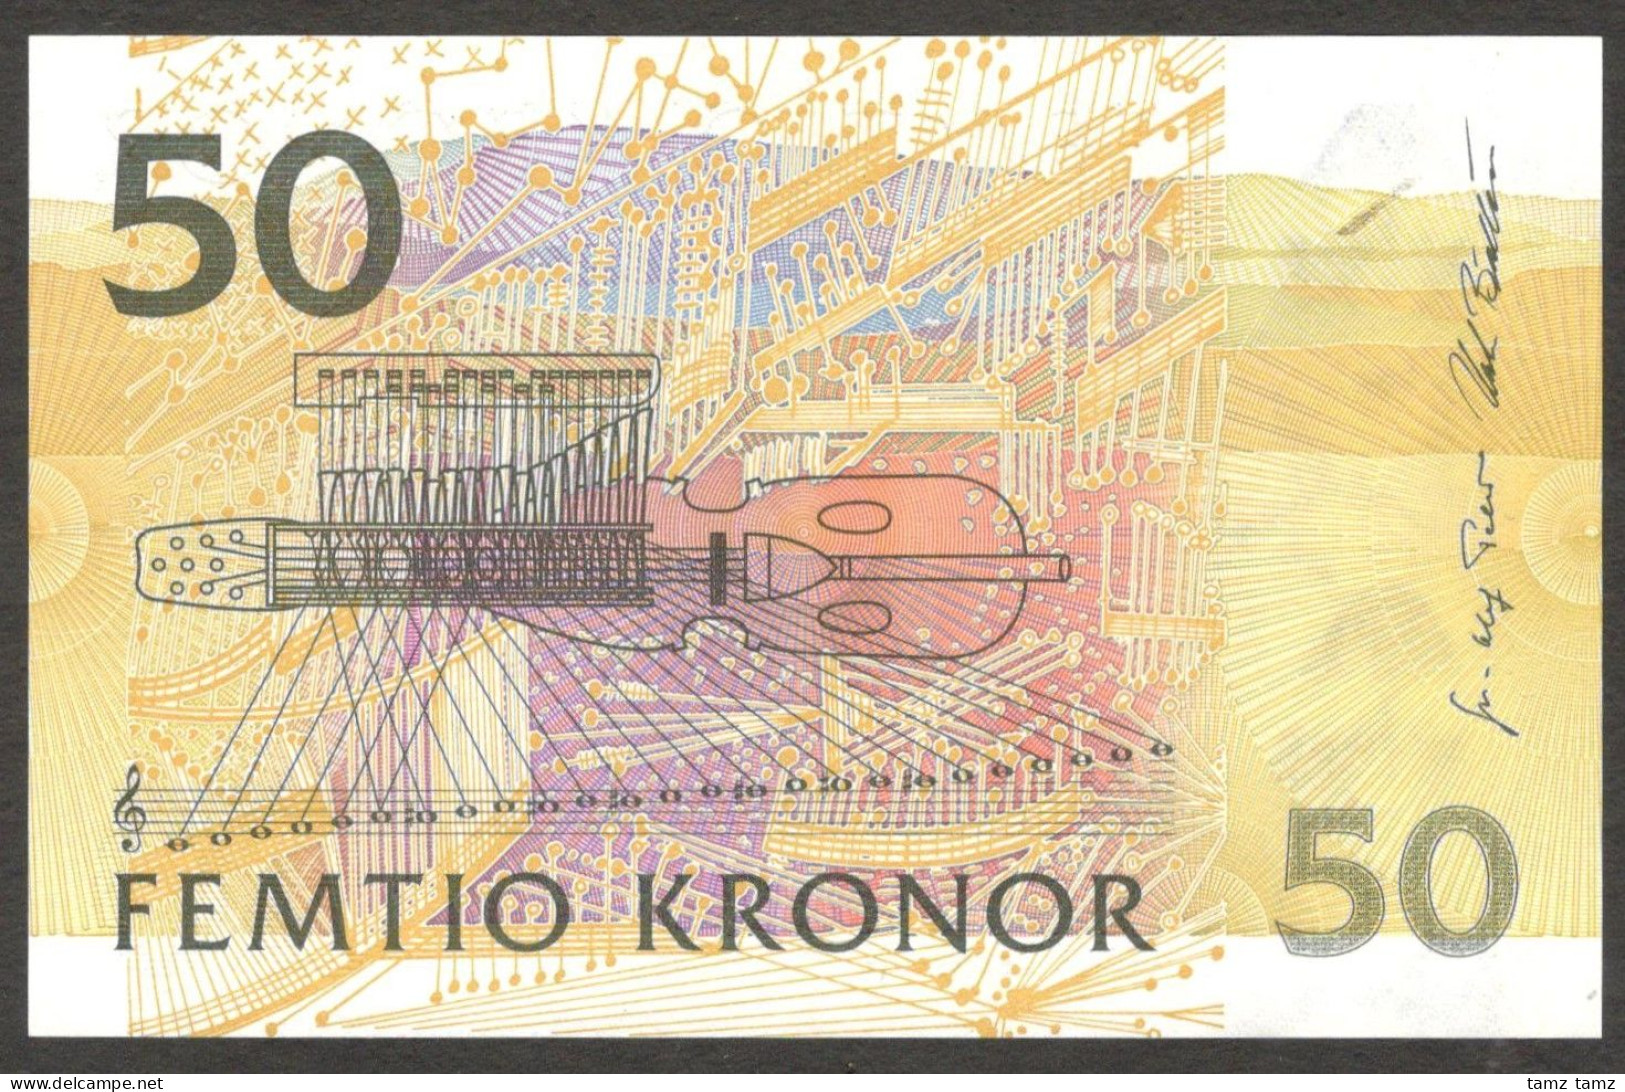 Sweden 50 Kronor Jenny Lind 1996 UNC Beautiful Banknotes - Suède